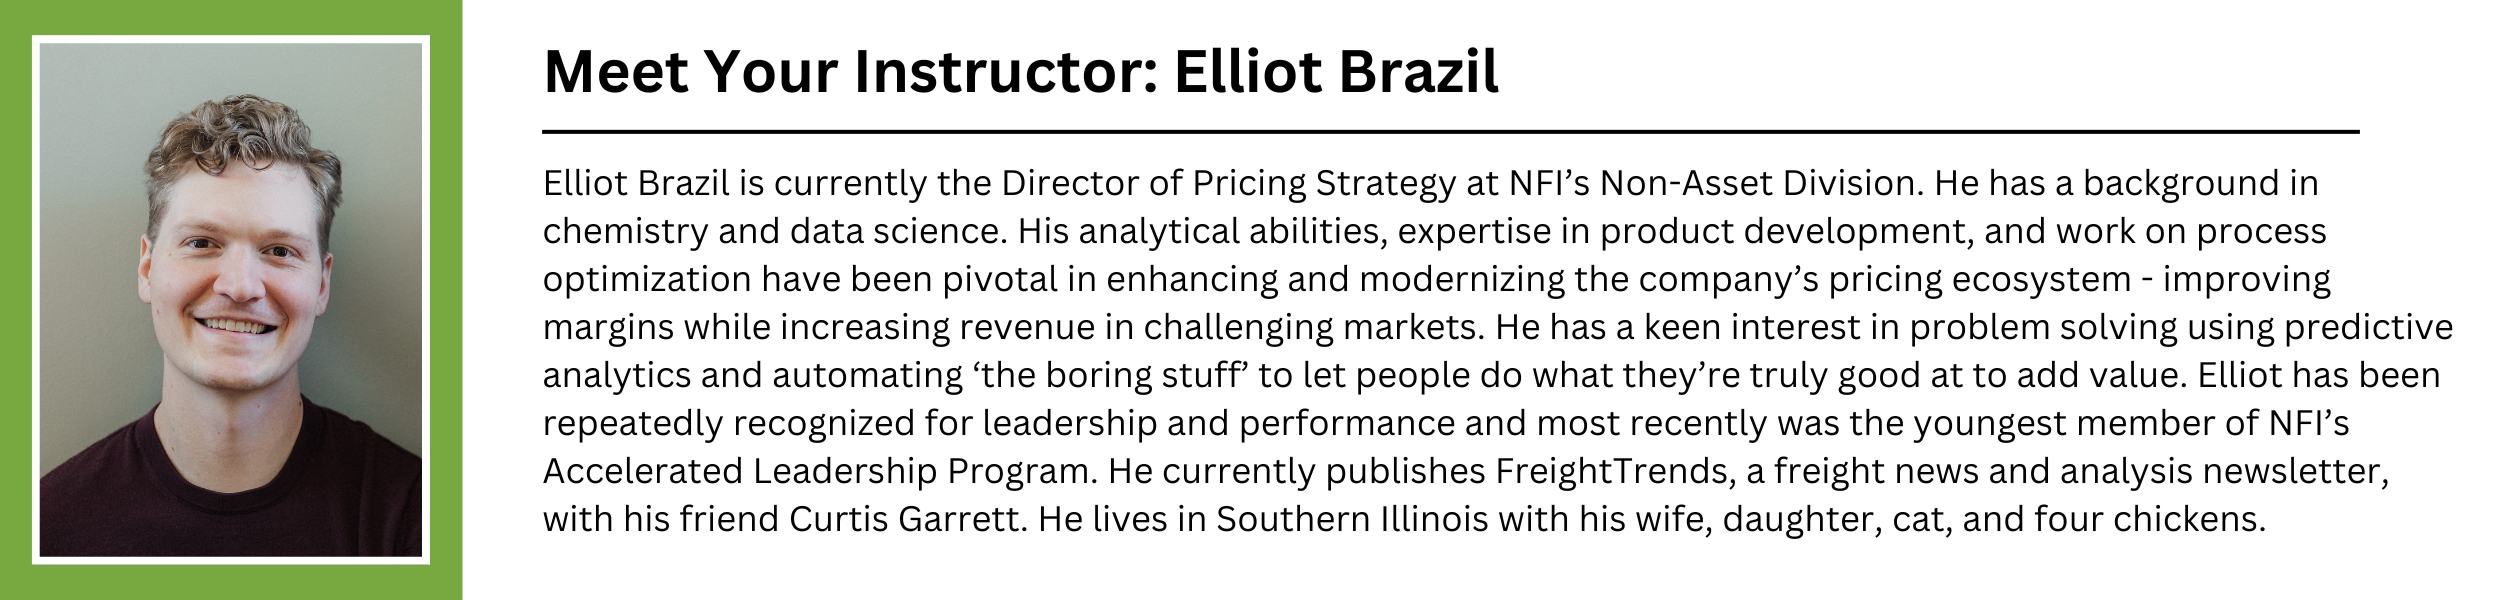 Elliot Brazil Meet the Instructor (2)